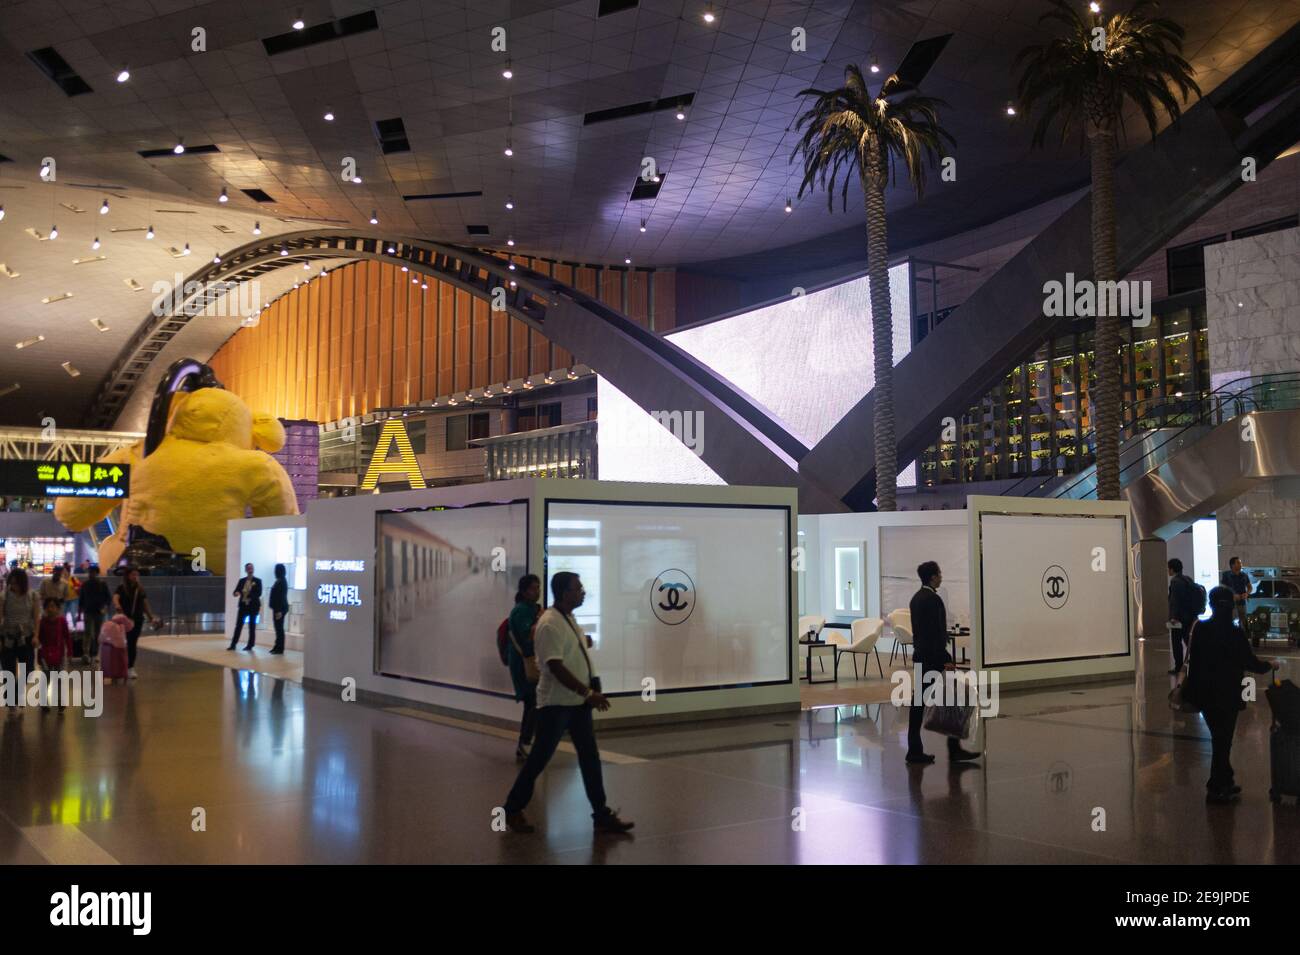 27.06.2019, Doha, Qatar, Asia - Interior view of the new terminal at Hamad International Airport. Stock Photo